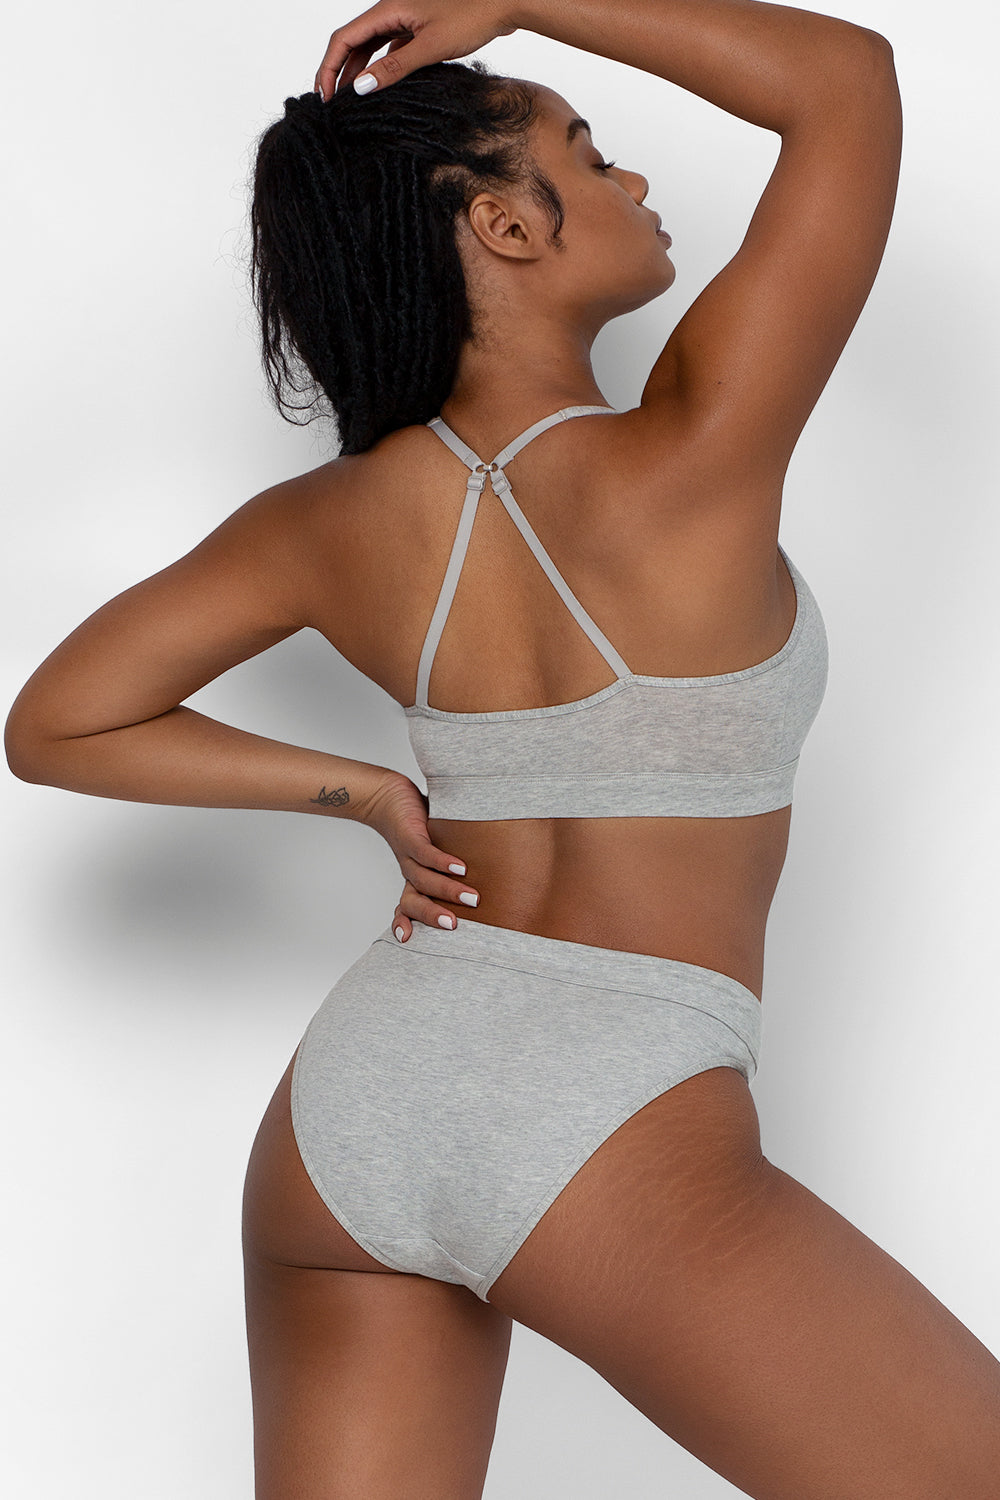 Aki Adamsа on X: bra #tightbody #panties #sexy #bra #nn #flatstomach    / X